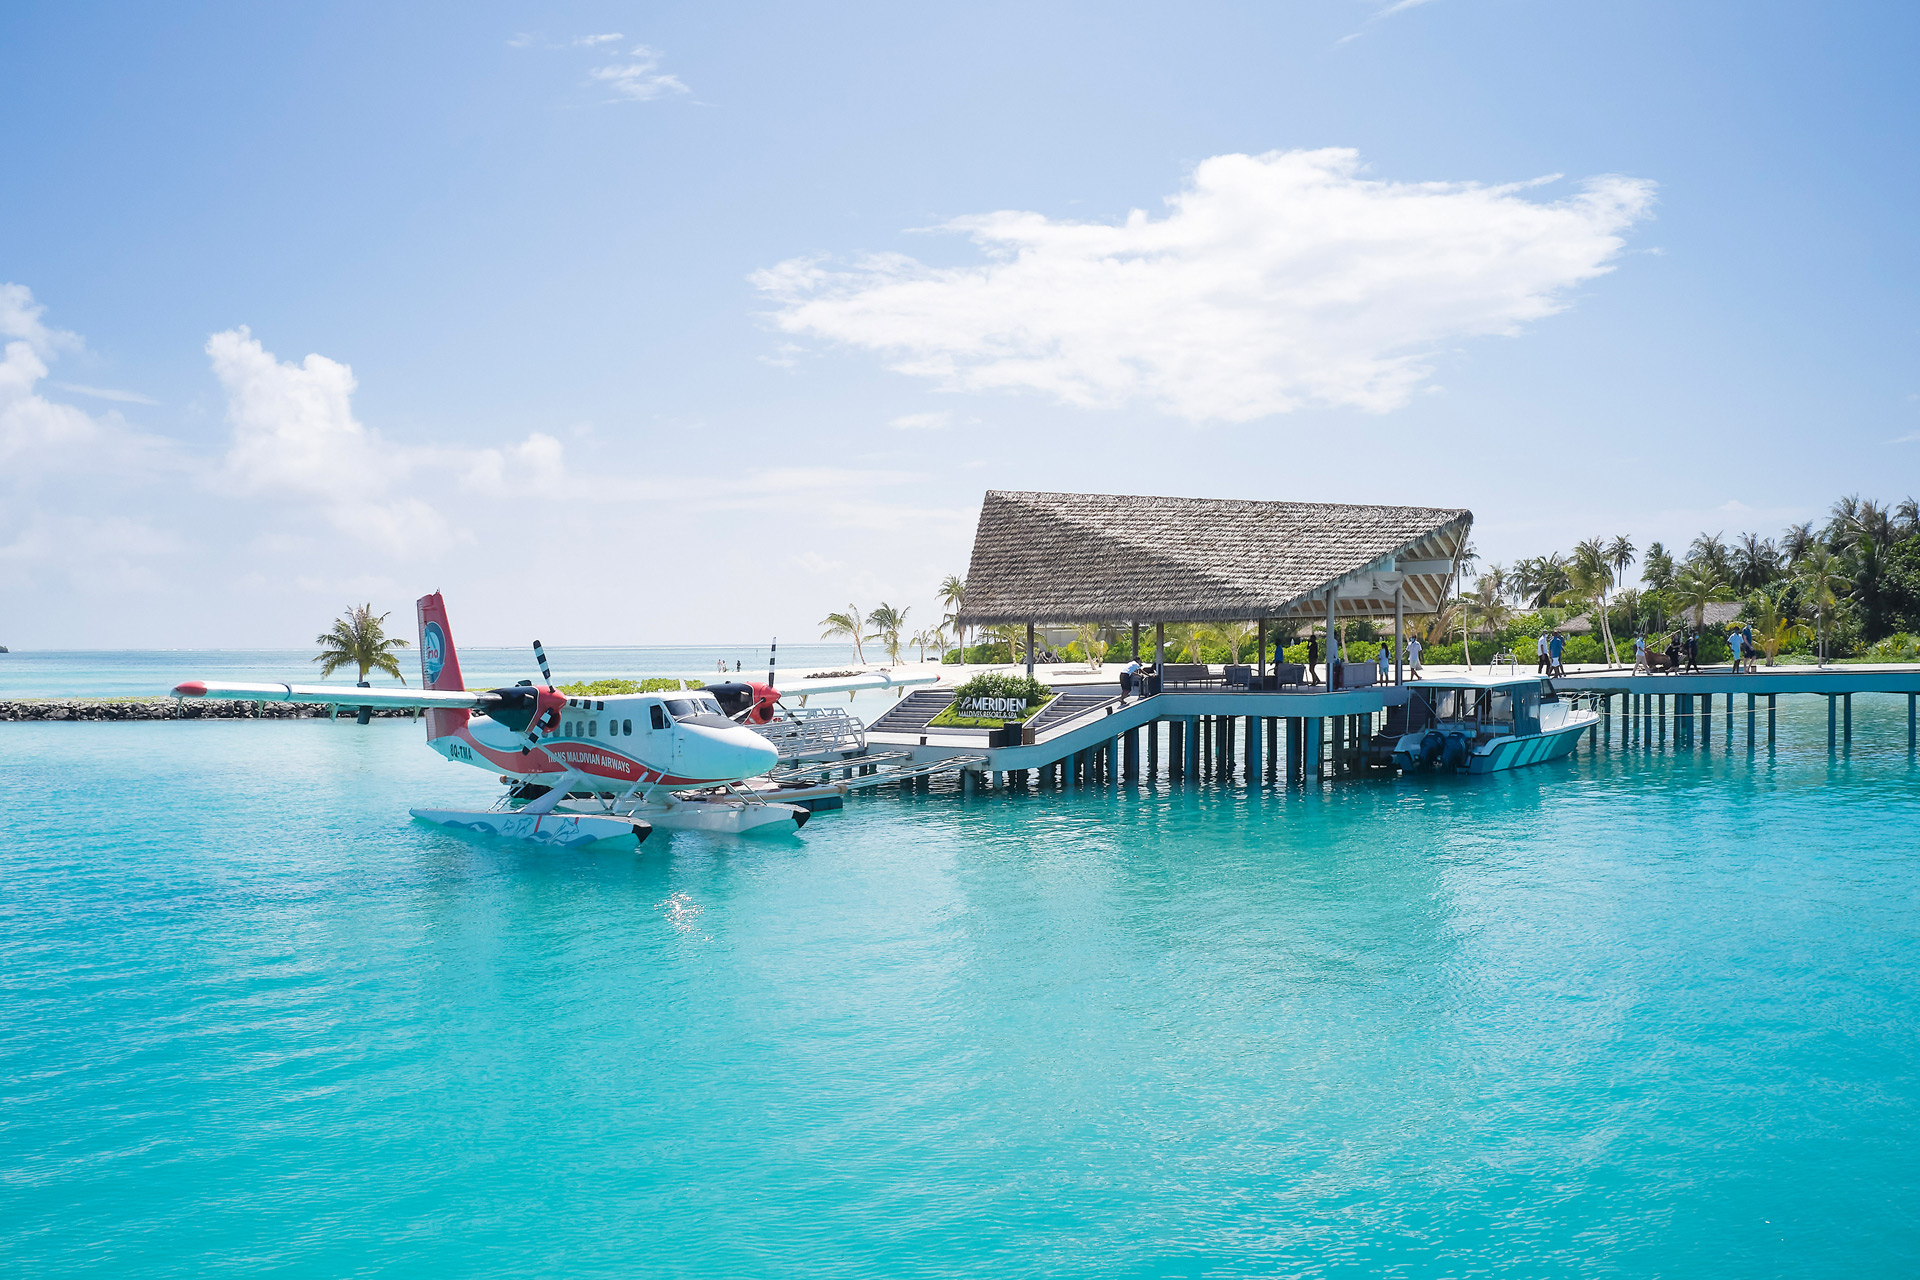 Le Meridien Maldives resort with passenger plane